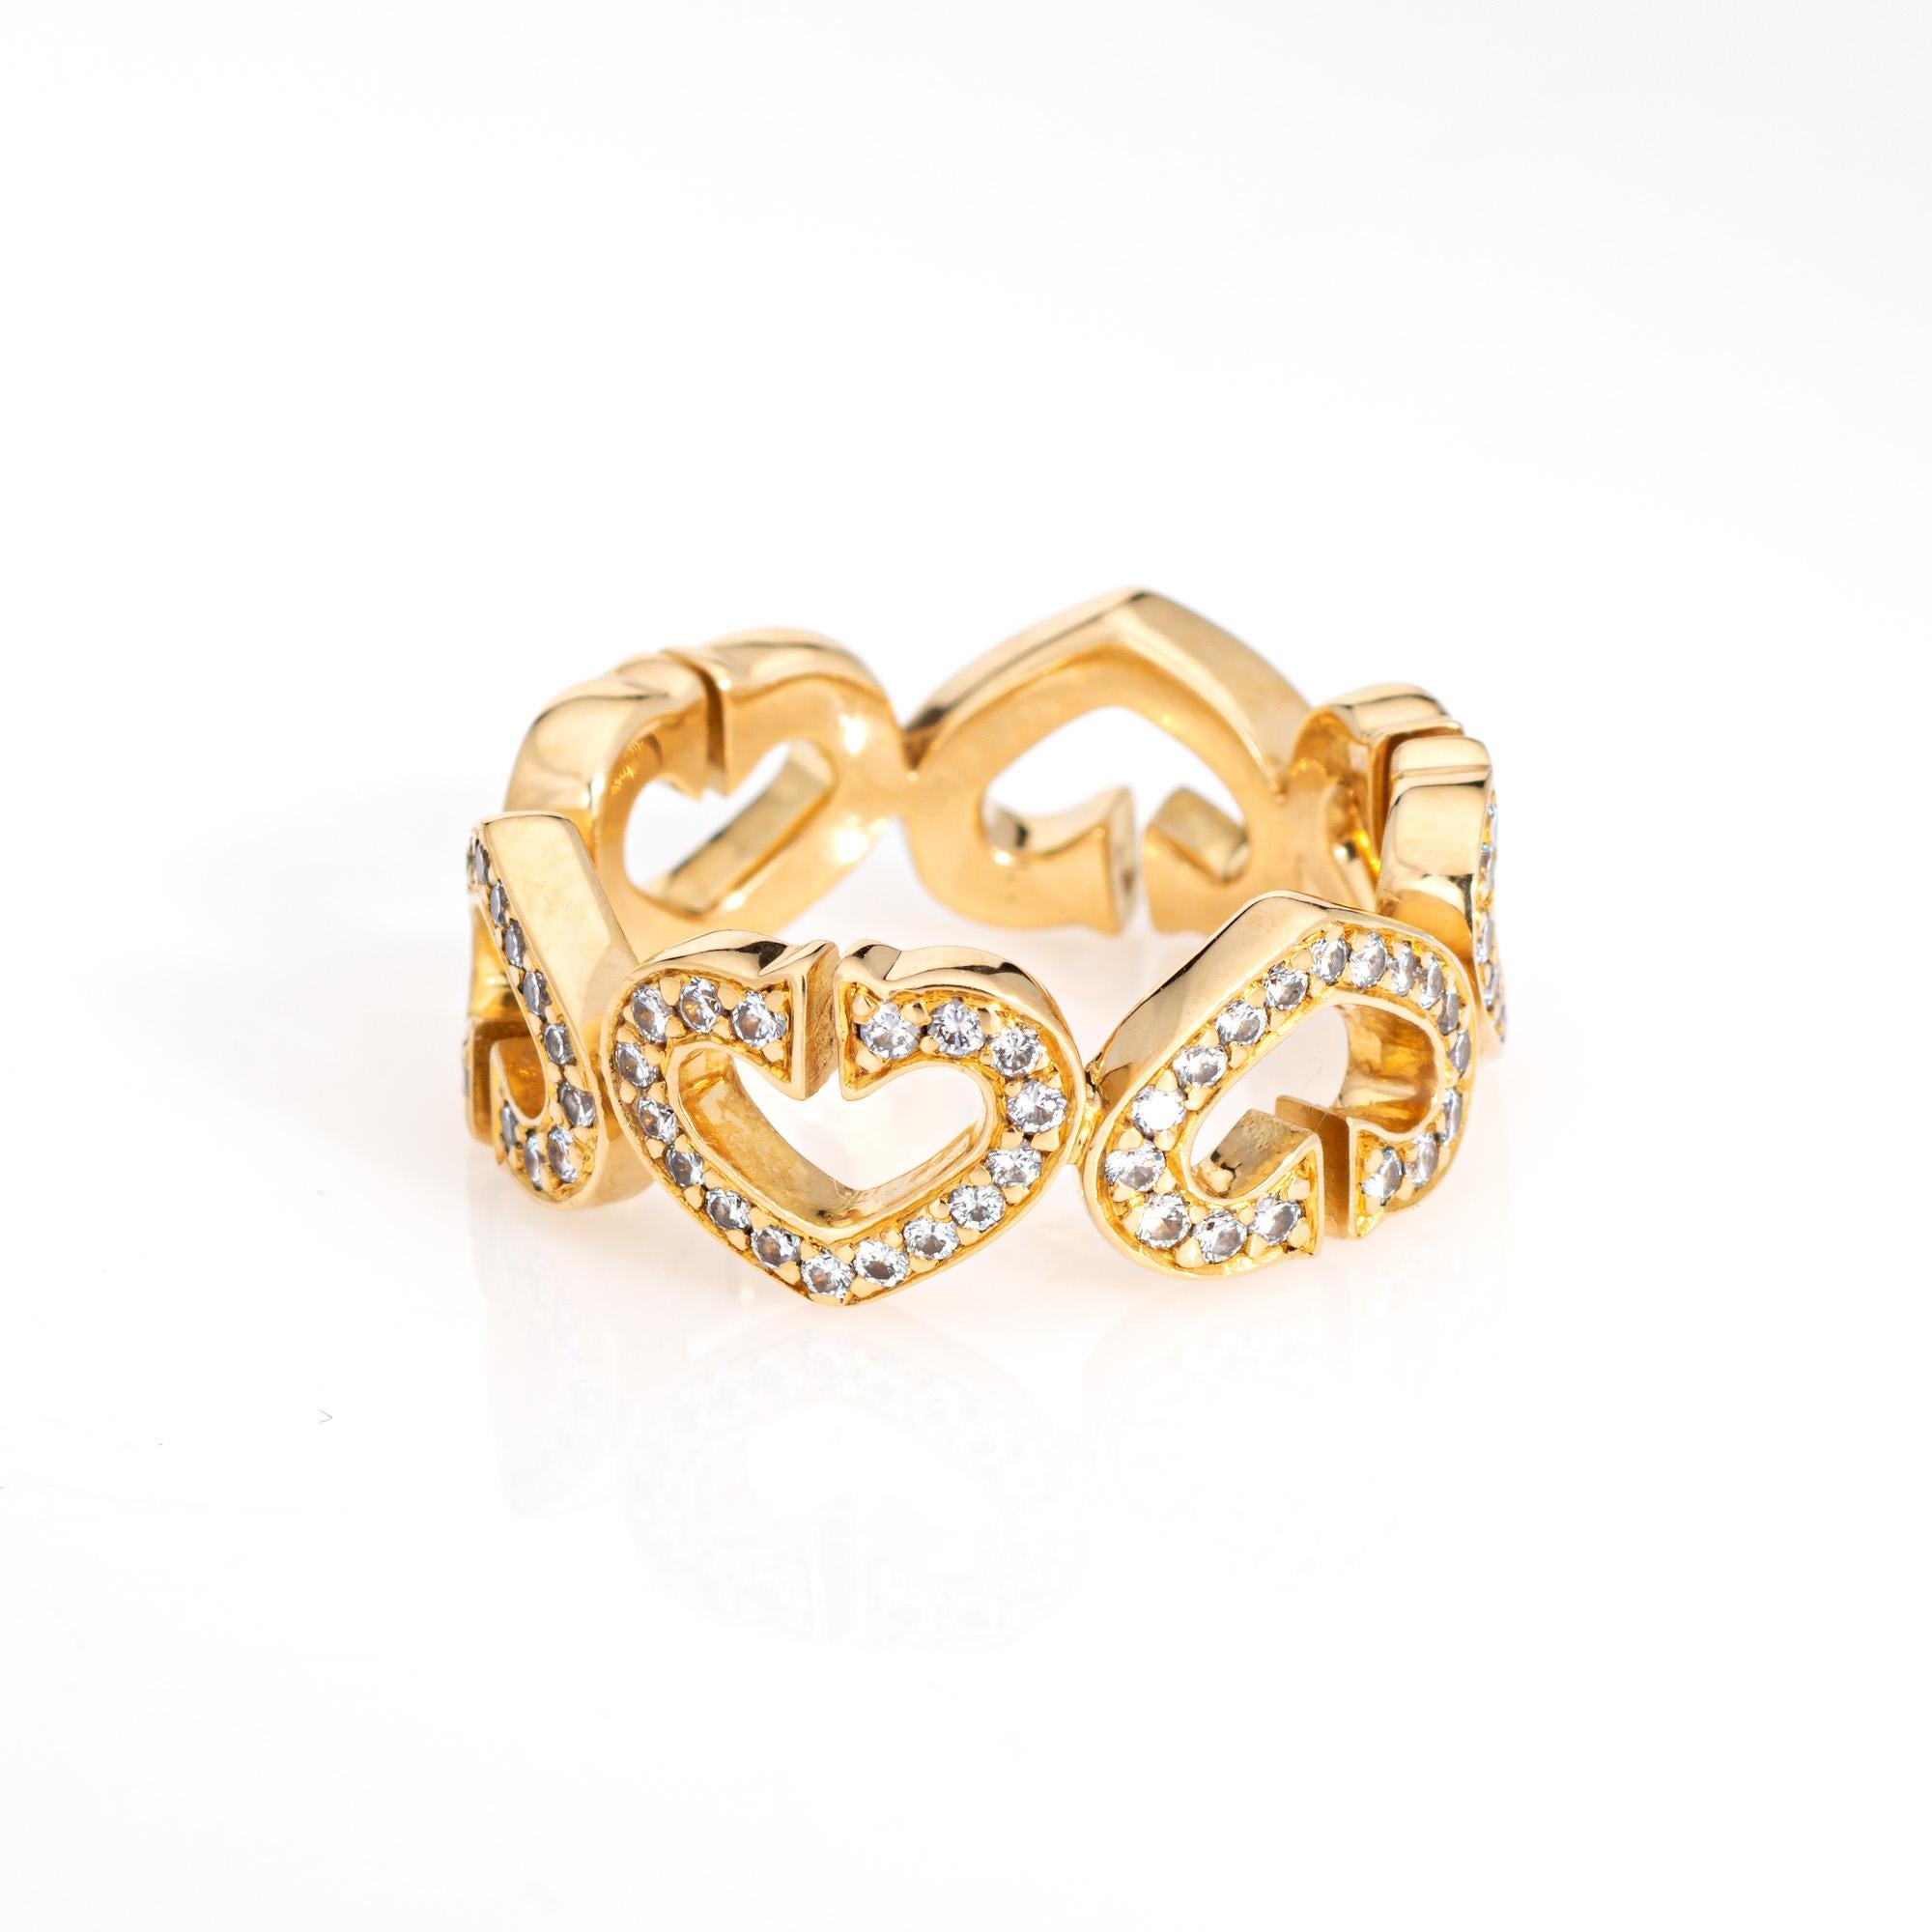 Round Cut C de Cartier Diamond Ring Sz 5.75 Heart Band c2001 18k Yellow Gold Jewelry  For Sale